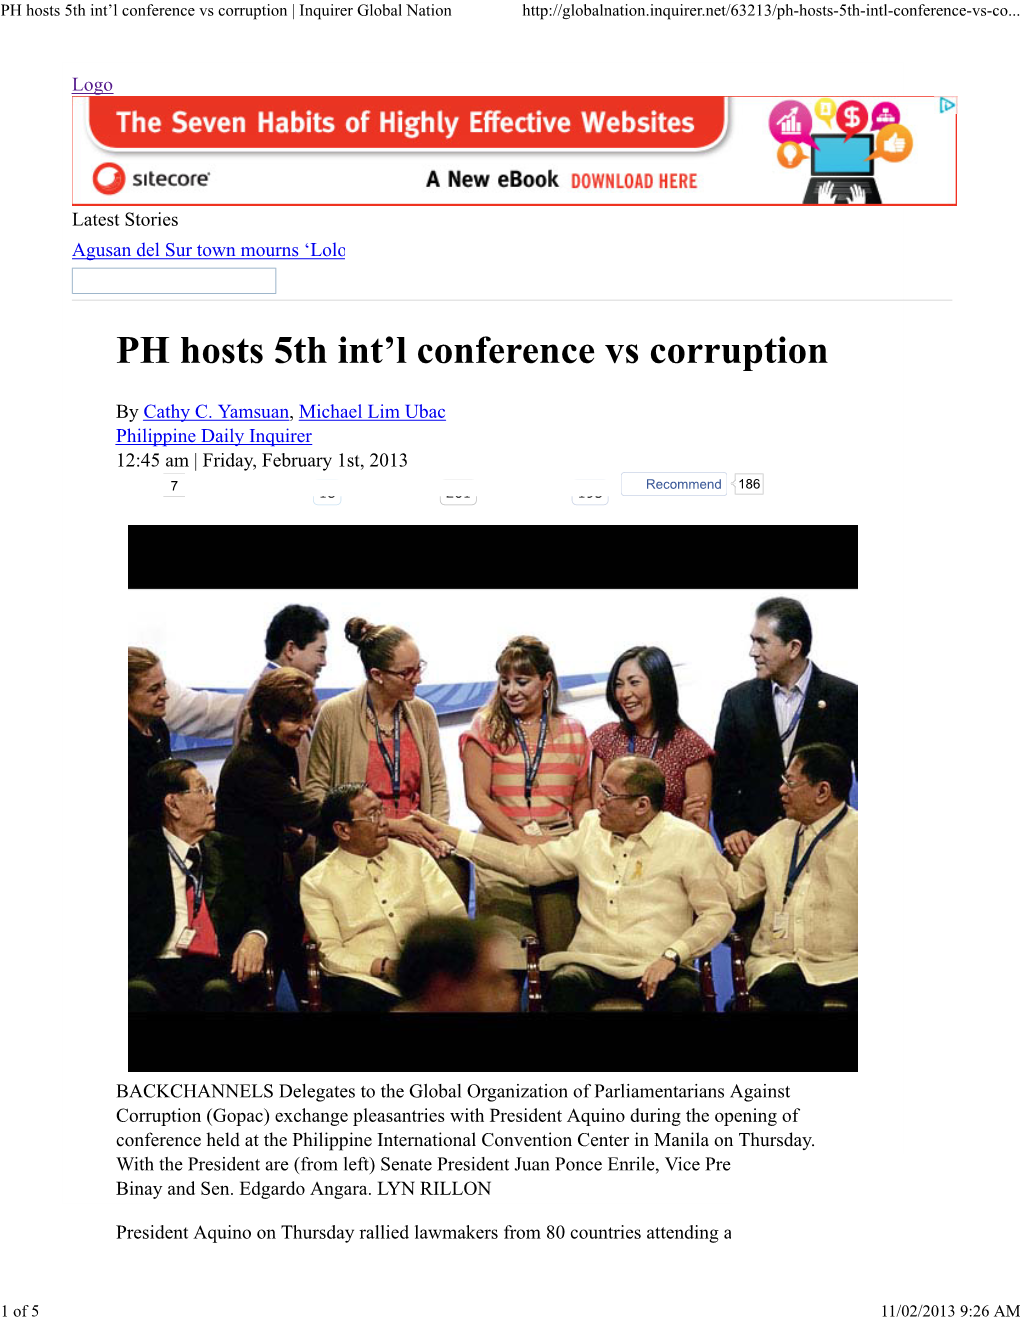 PH Hosts 5Th Int'l Conference Vs Corruption